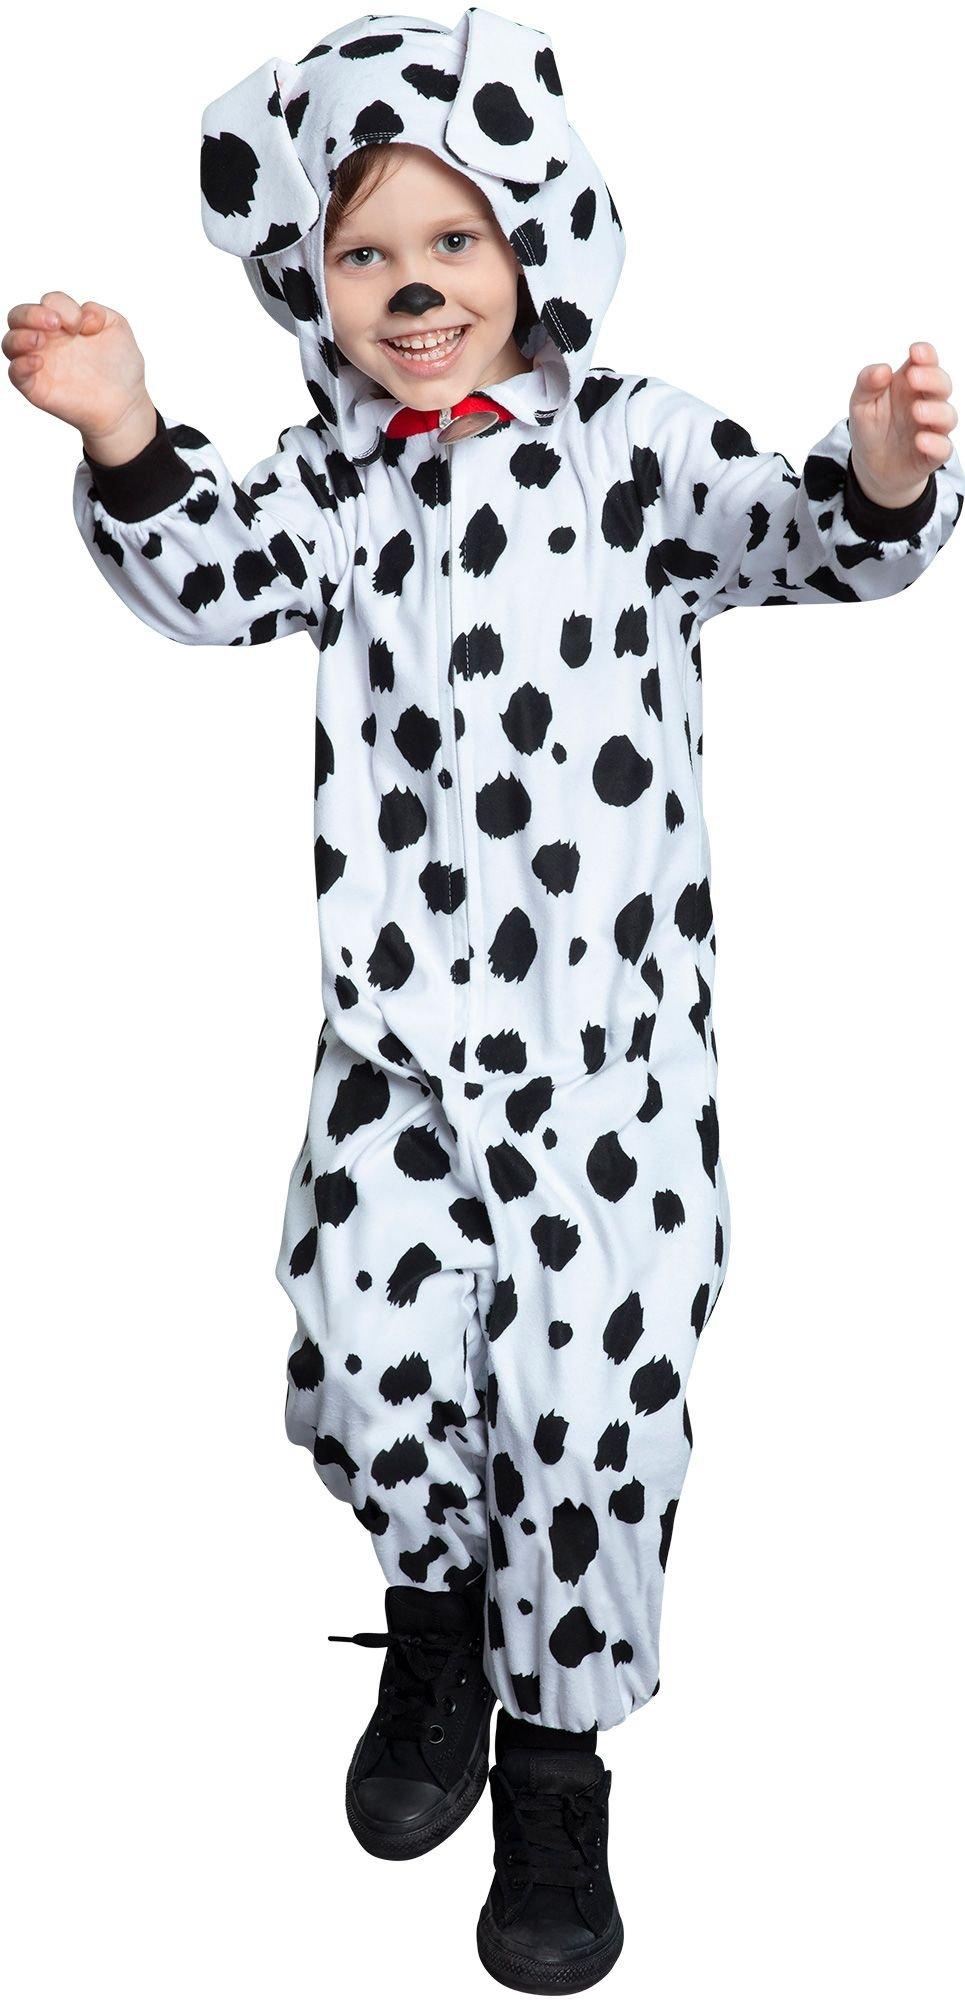 Kids' Dalmatian Costume